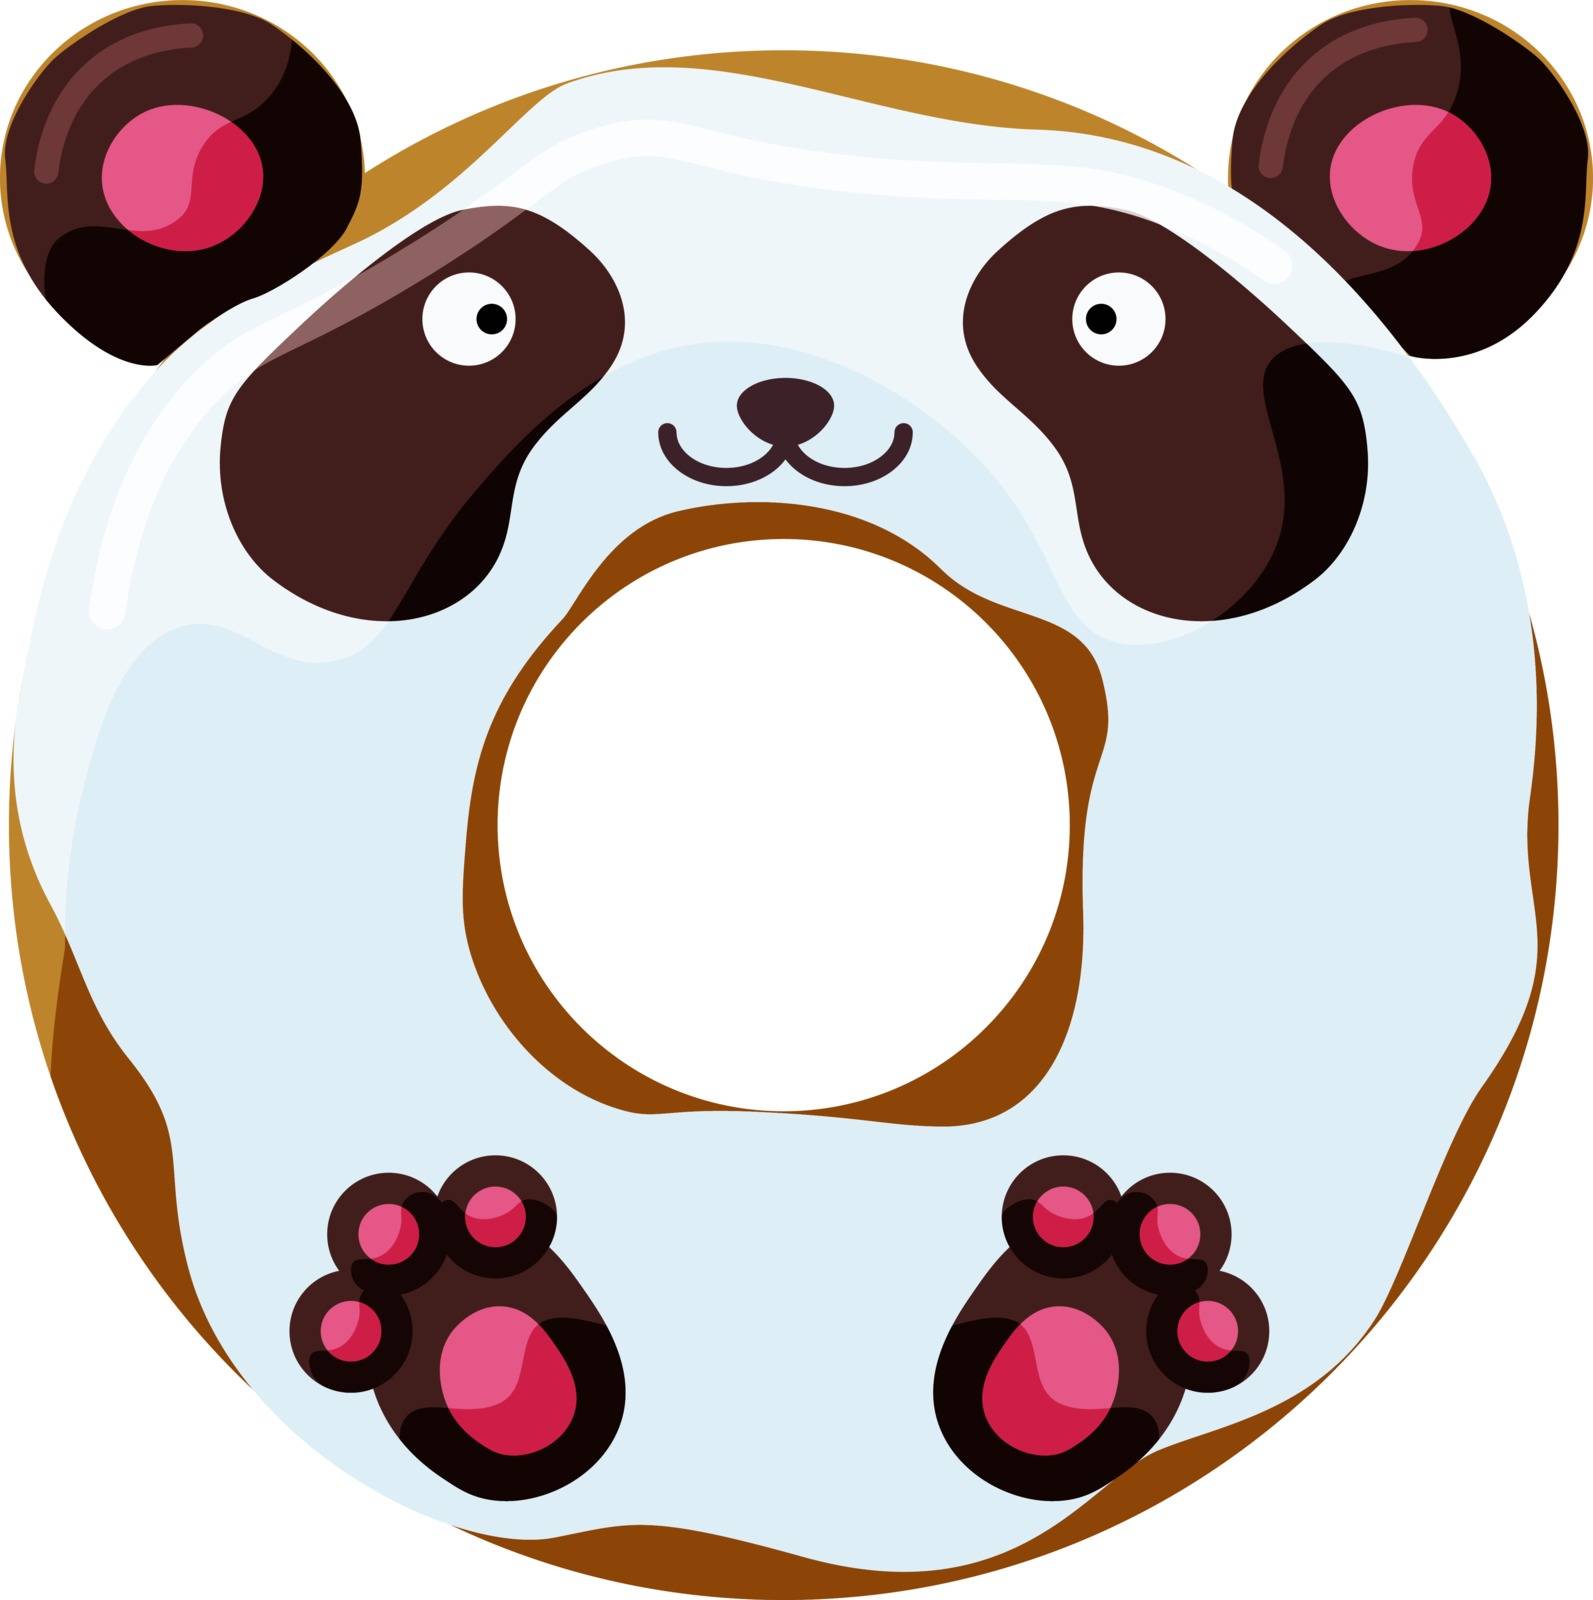 Cute panda donut isolated on white vector illustration. Cute cartoon character.